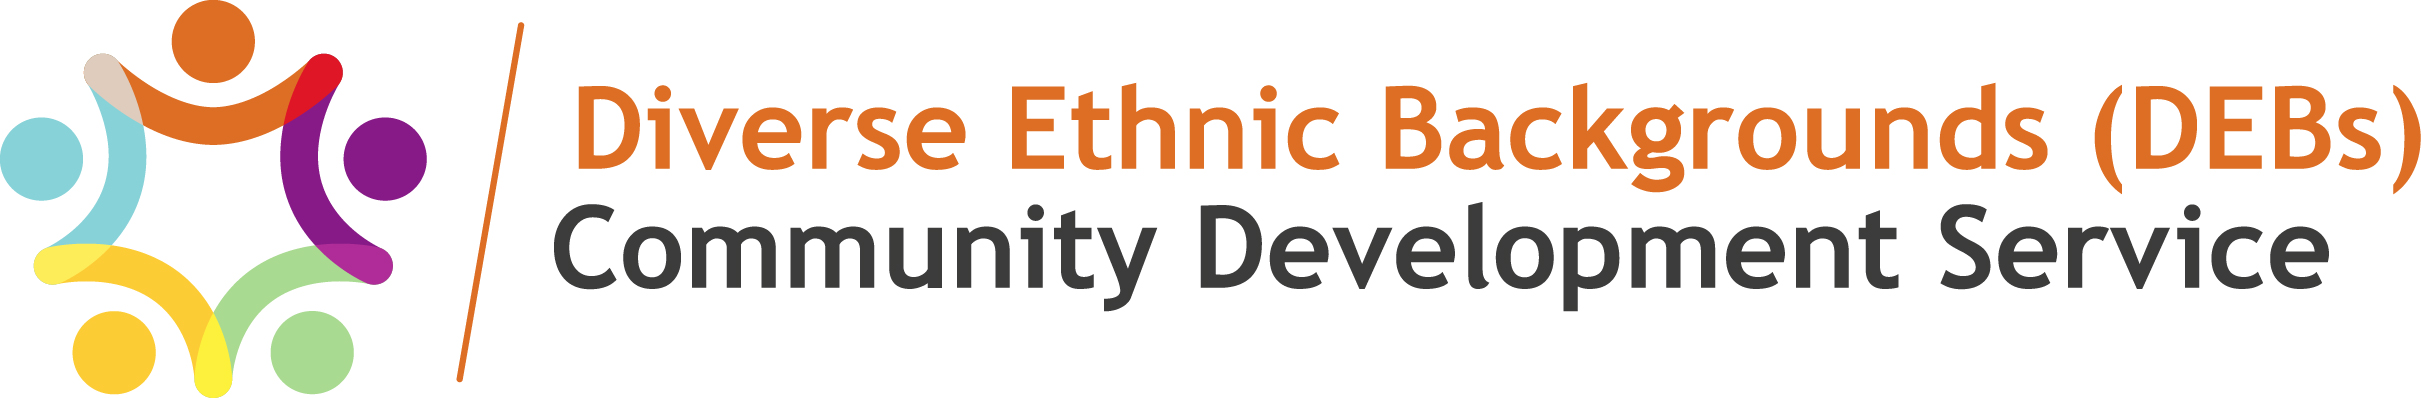 DEBs Community Development Service Logo